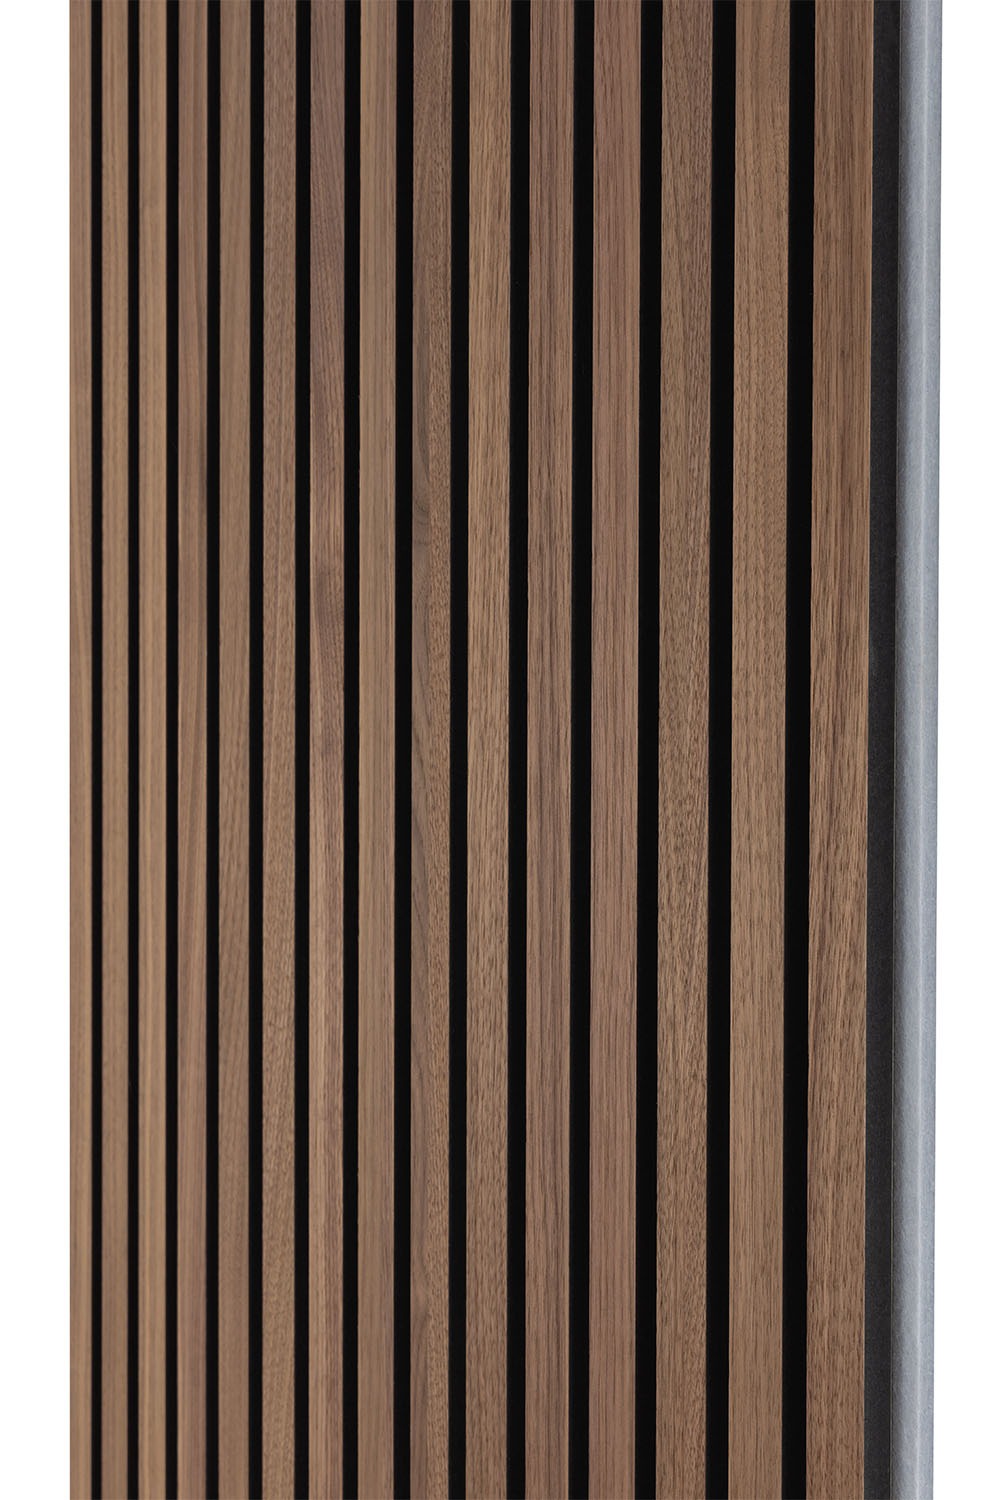 Deep Walnut SlatWall panel placed at angle to show veneer, dark coloured core, and grey felt backing